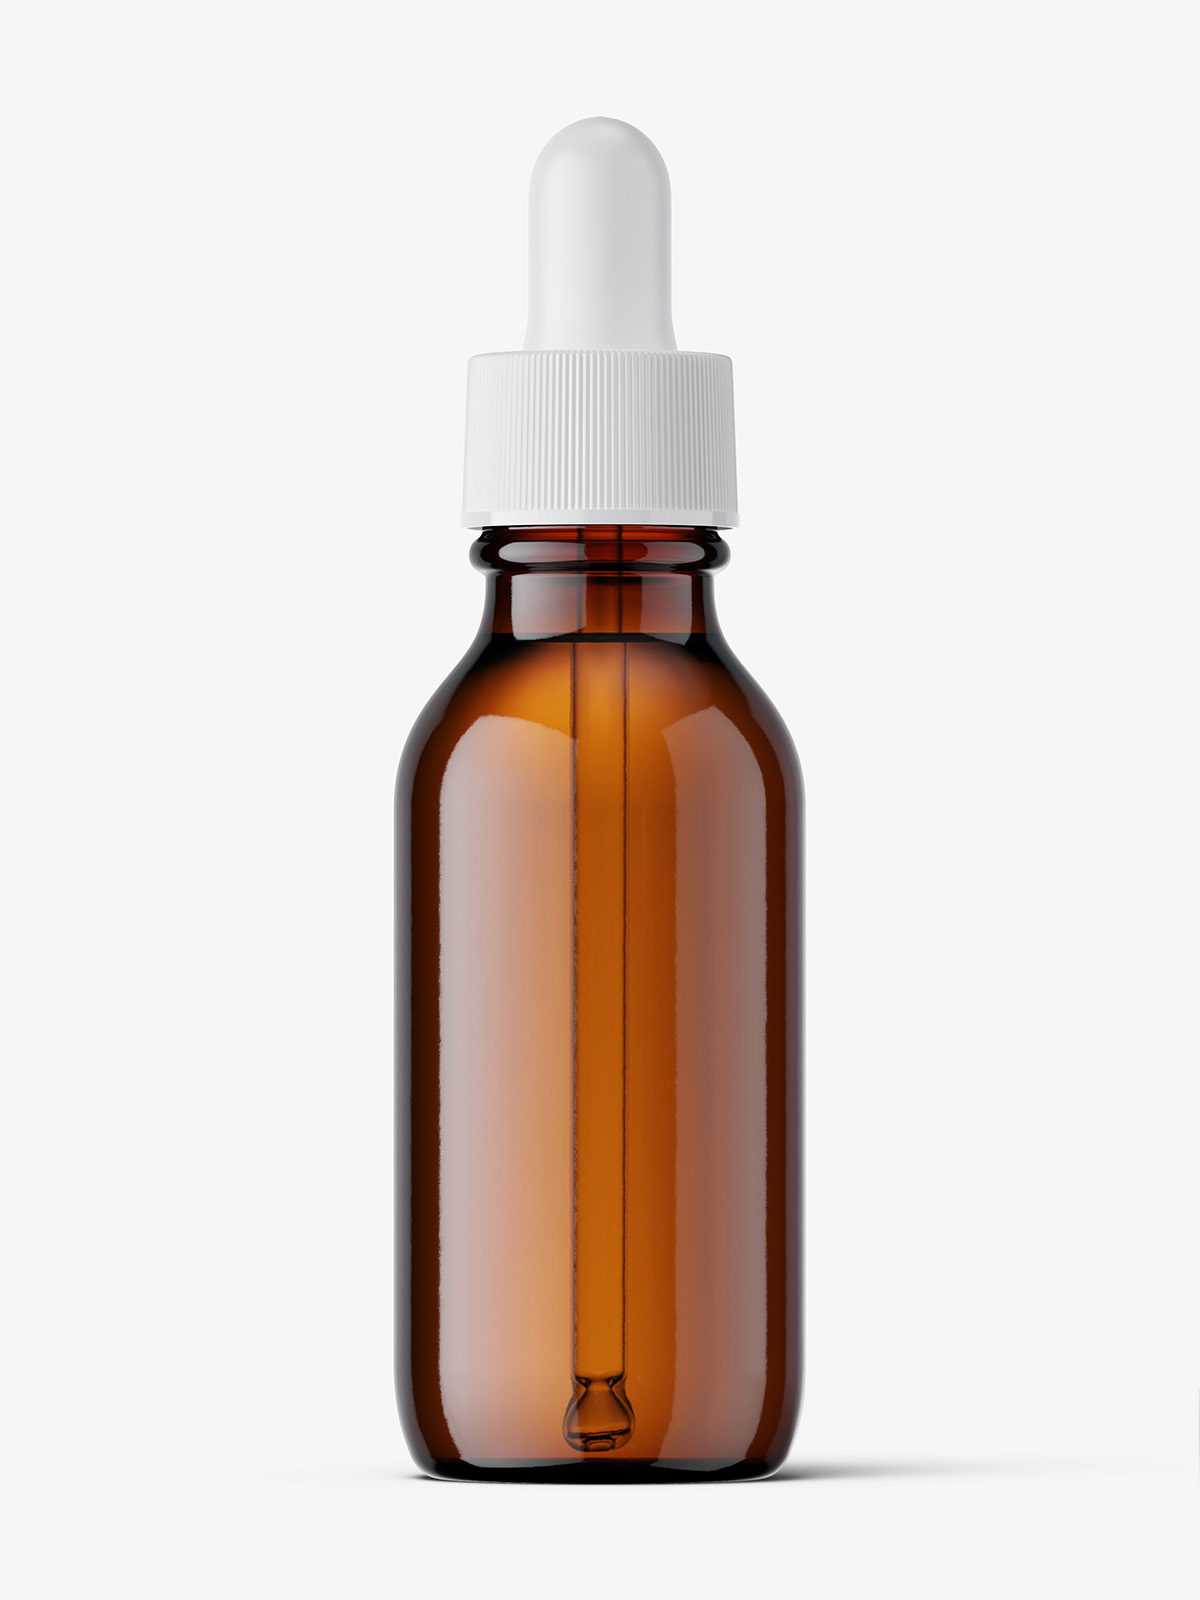 Amber winchester dropper bottle mockup / 30 ml - Smarty Mockups